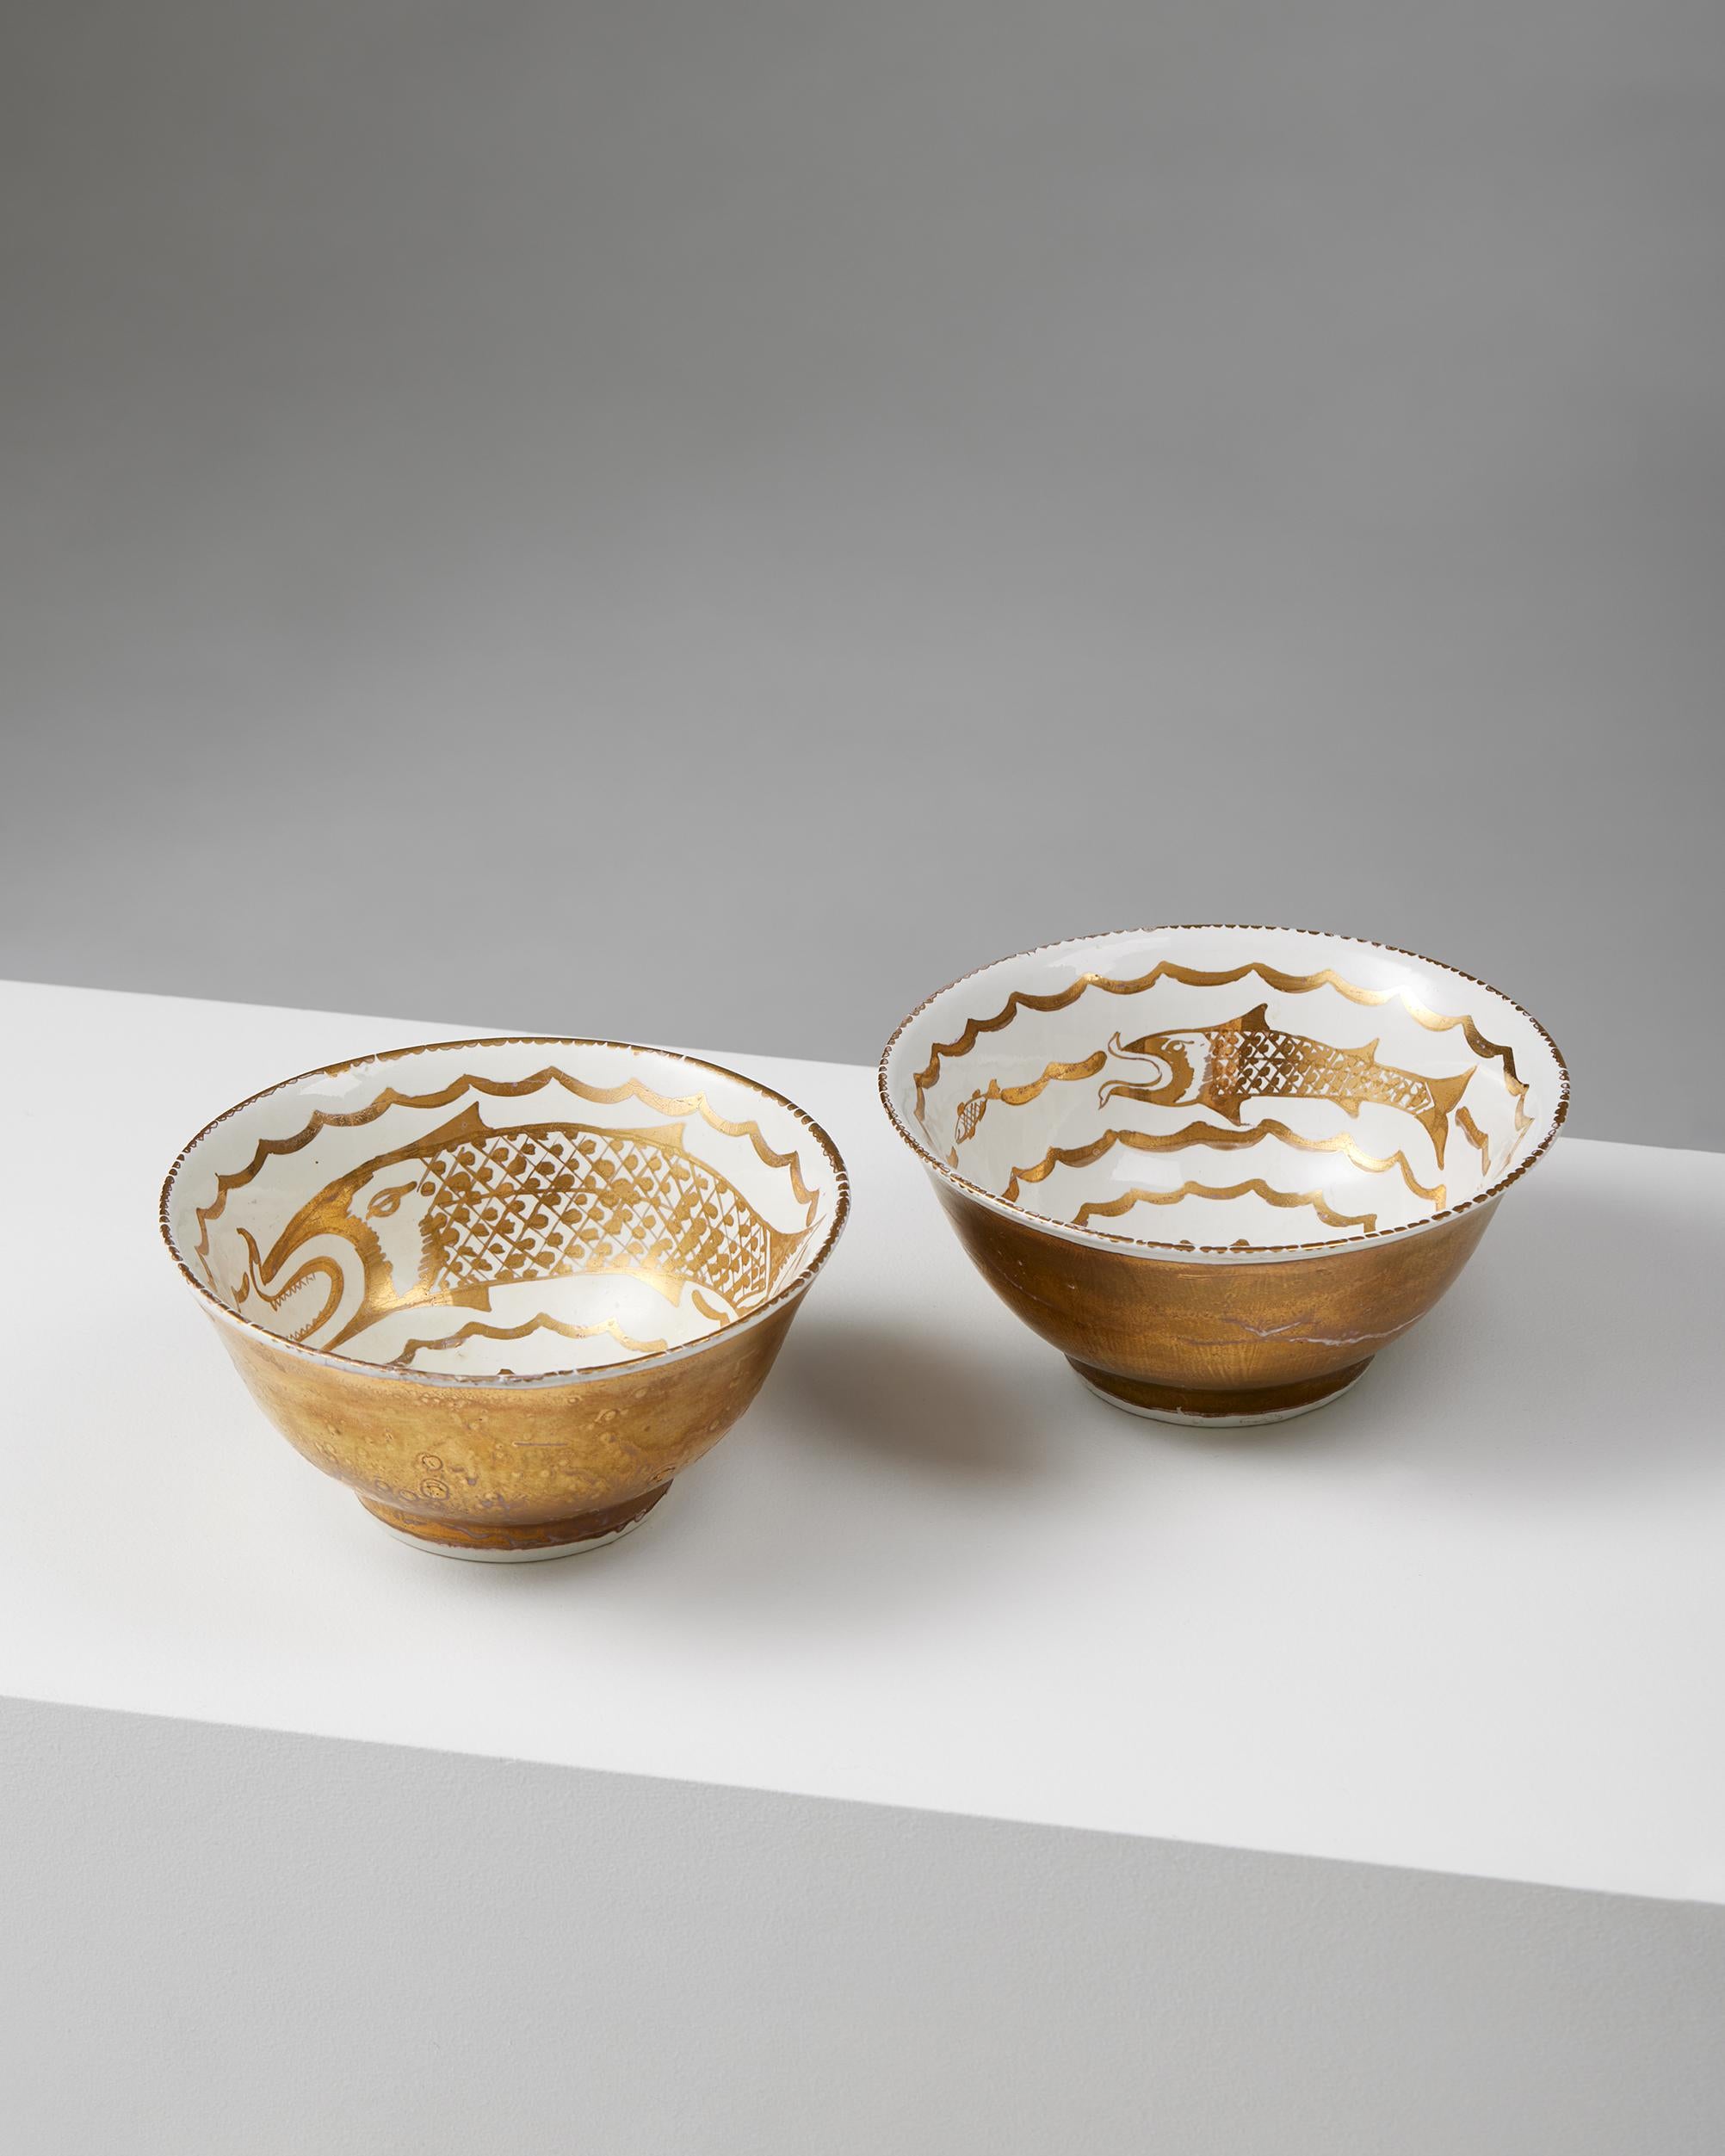 Pair of bowls designed by Wilhelm Kåge for Gustavsberg, Sweden, 1925
Signed.

Stoneware.

H: 9 cm / 3 1/2''
Diameter: 19 cm / 7 1/2''